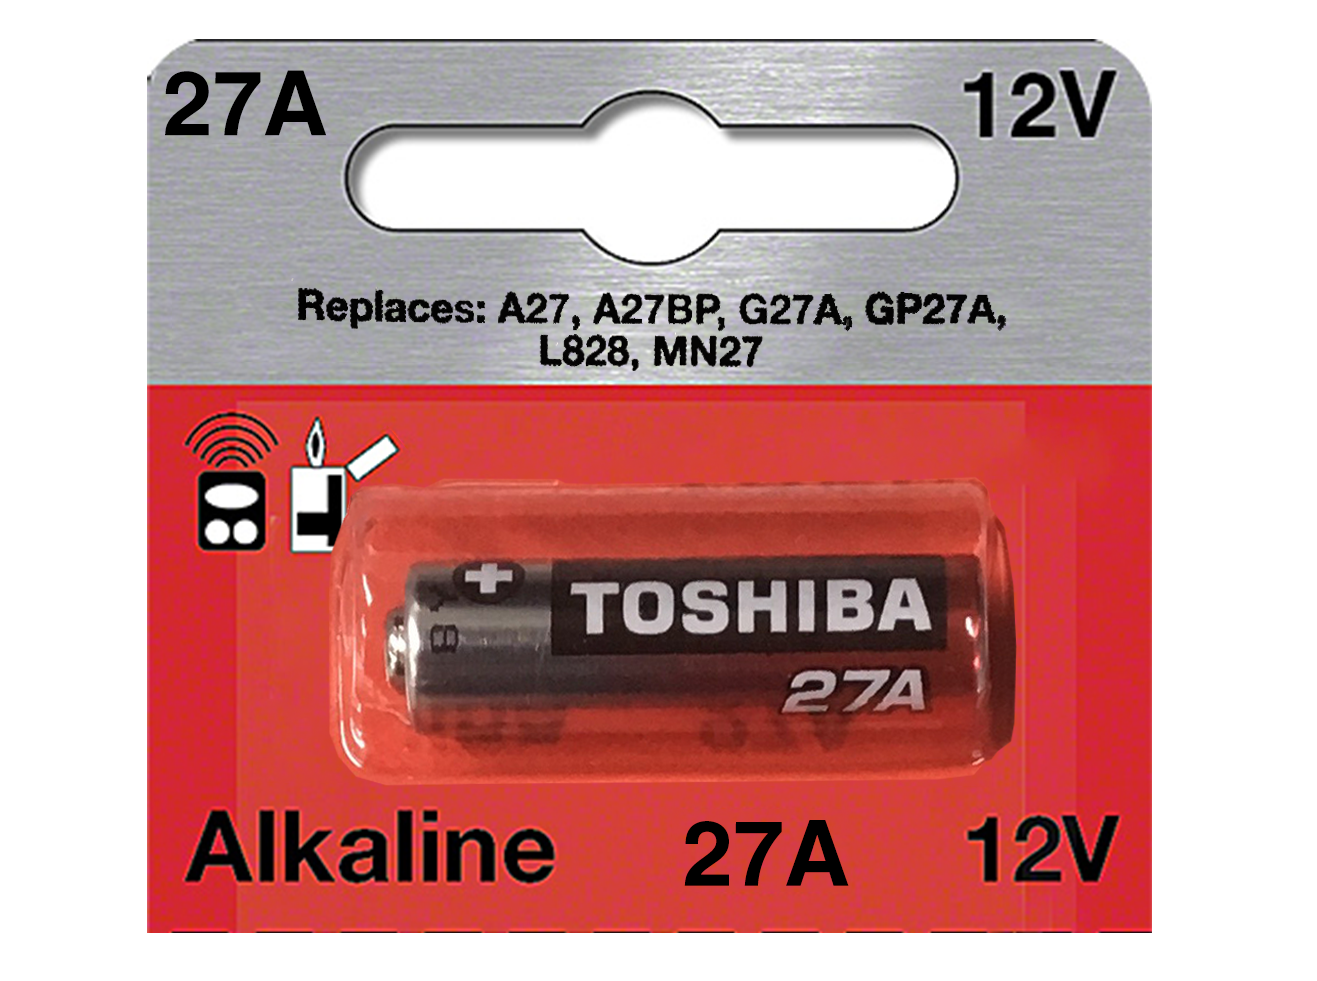 Toshiba 27A Alkaline 12V Battery, Blister Pack, (1 Pc)